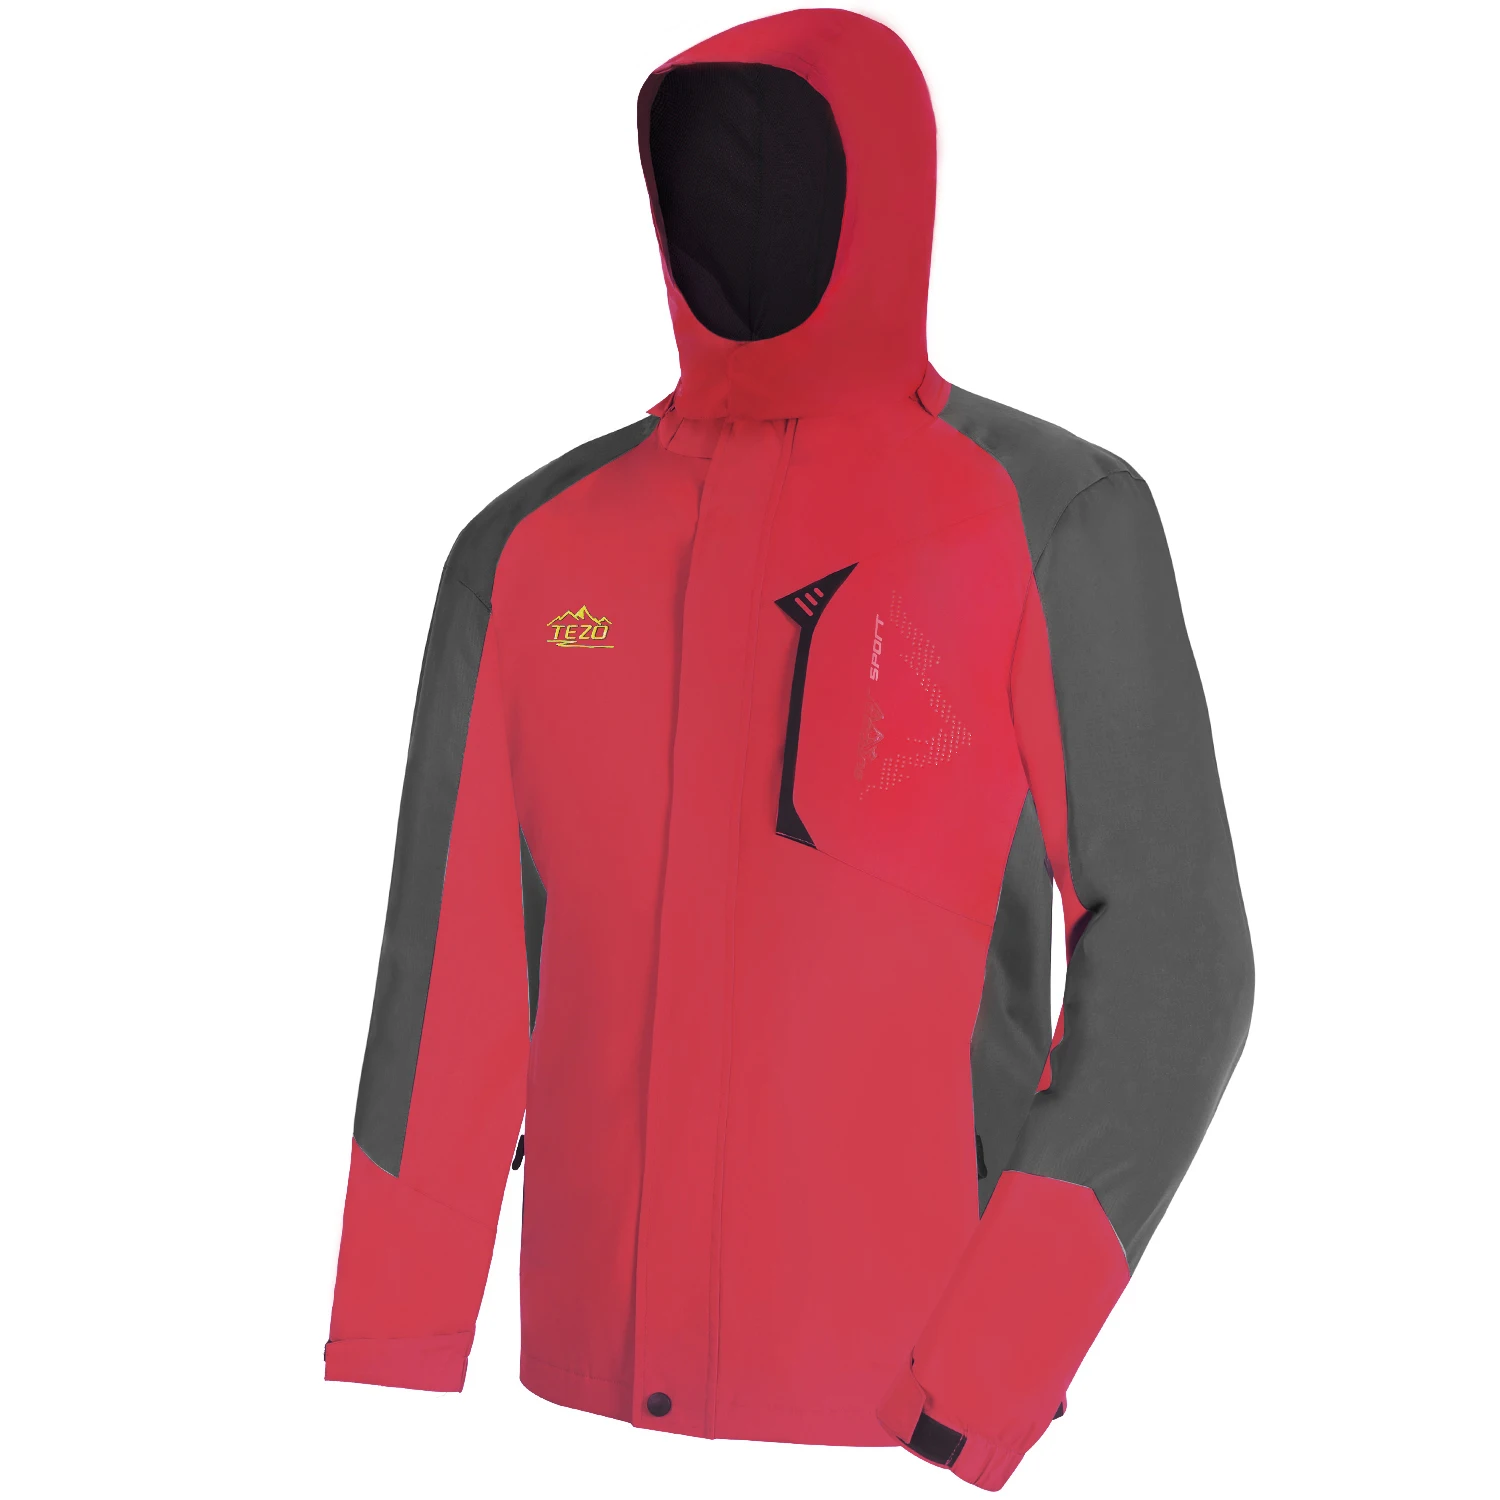 
2020 Retro Style Camping Wear Warm Keep Pullover Vintage Windbreaker Hiking Jacket 